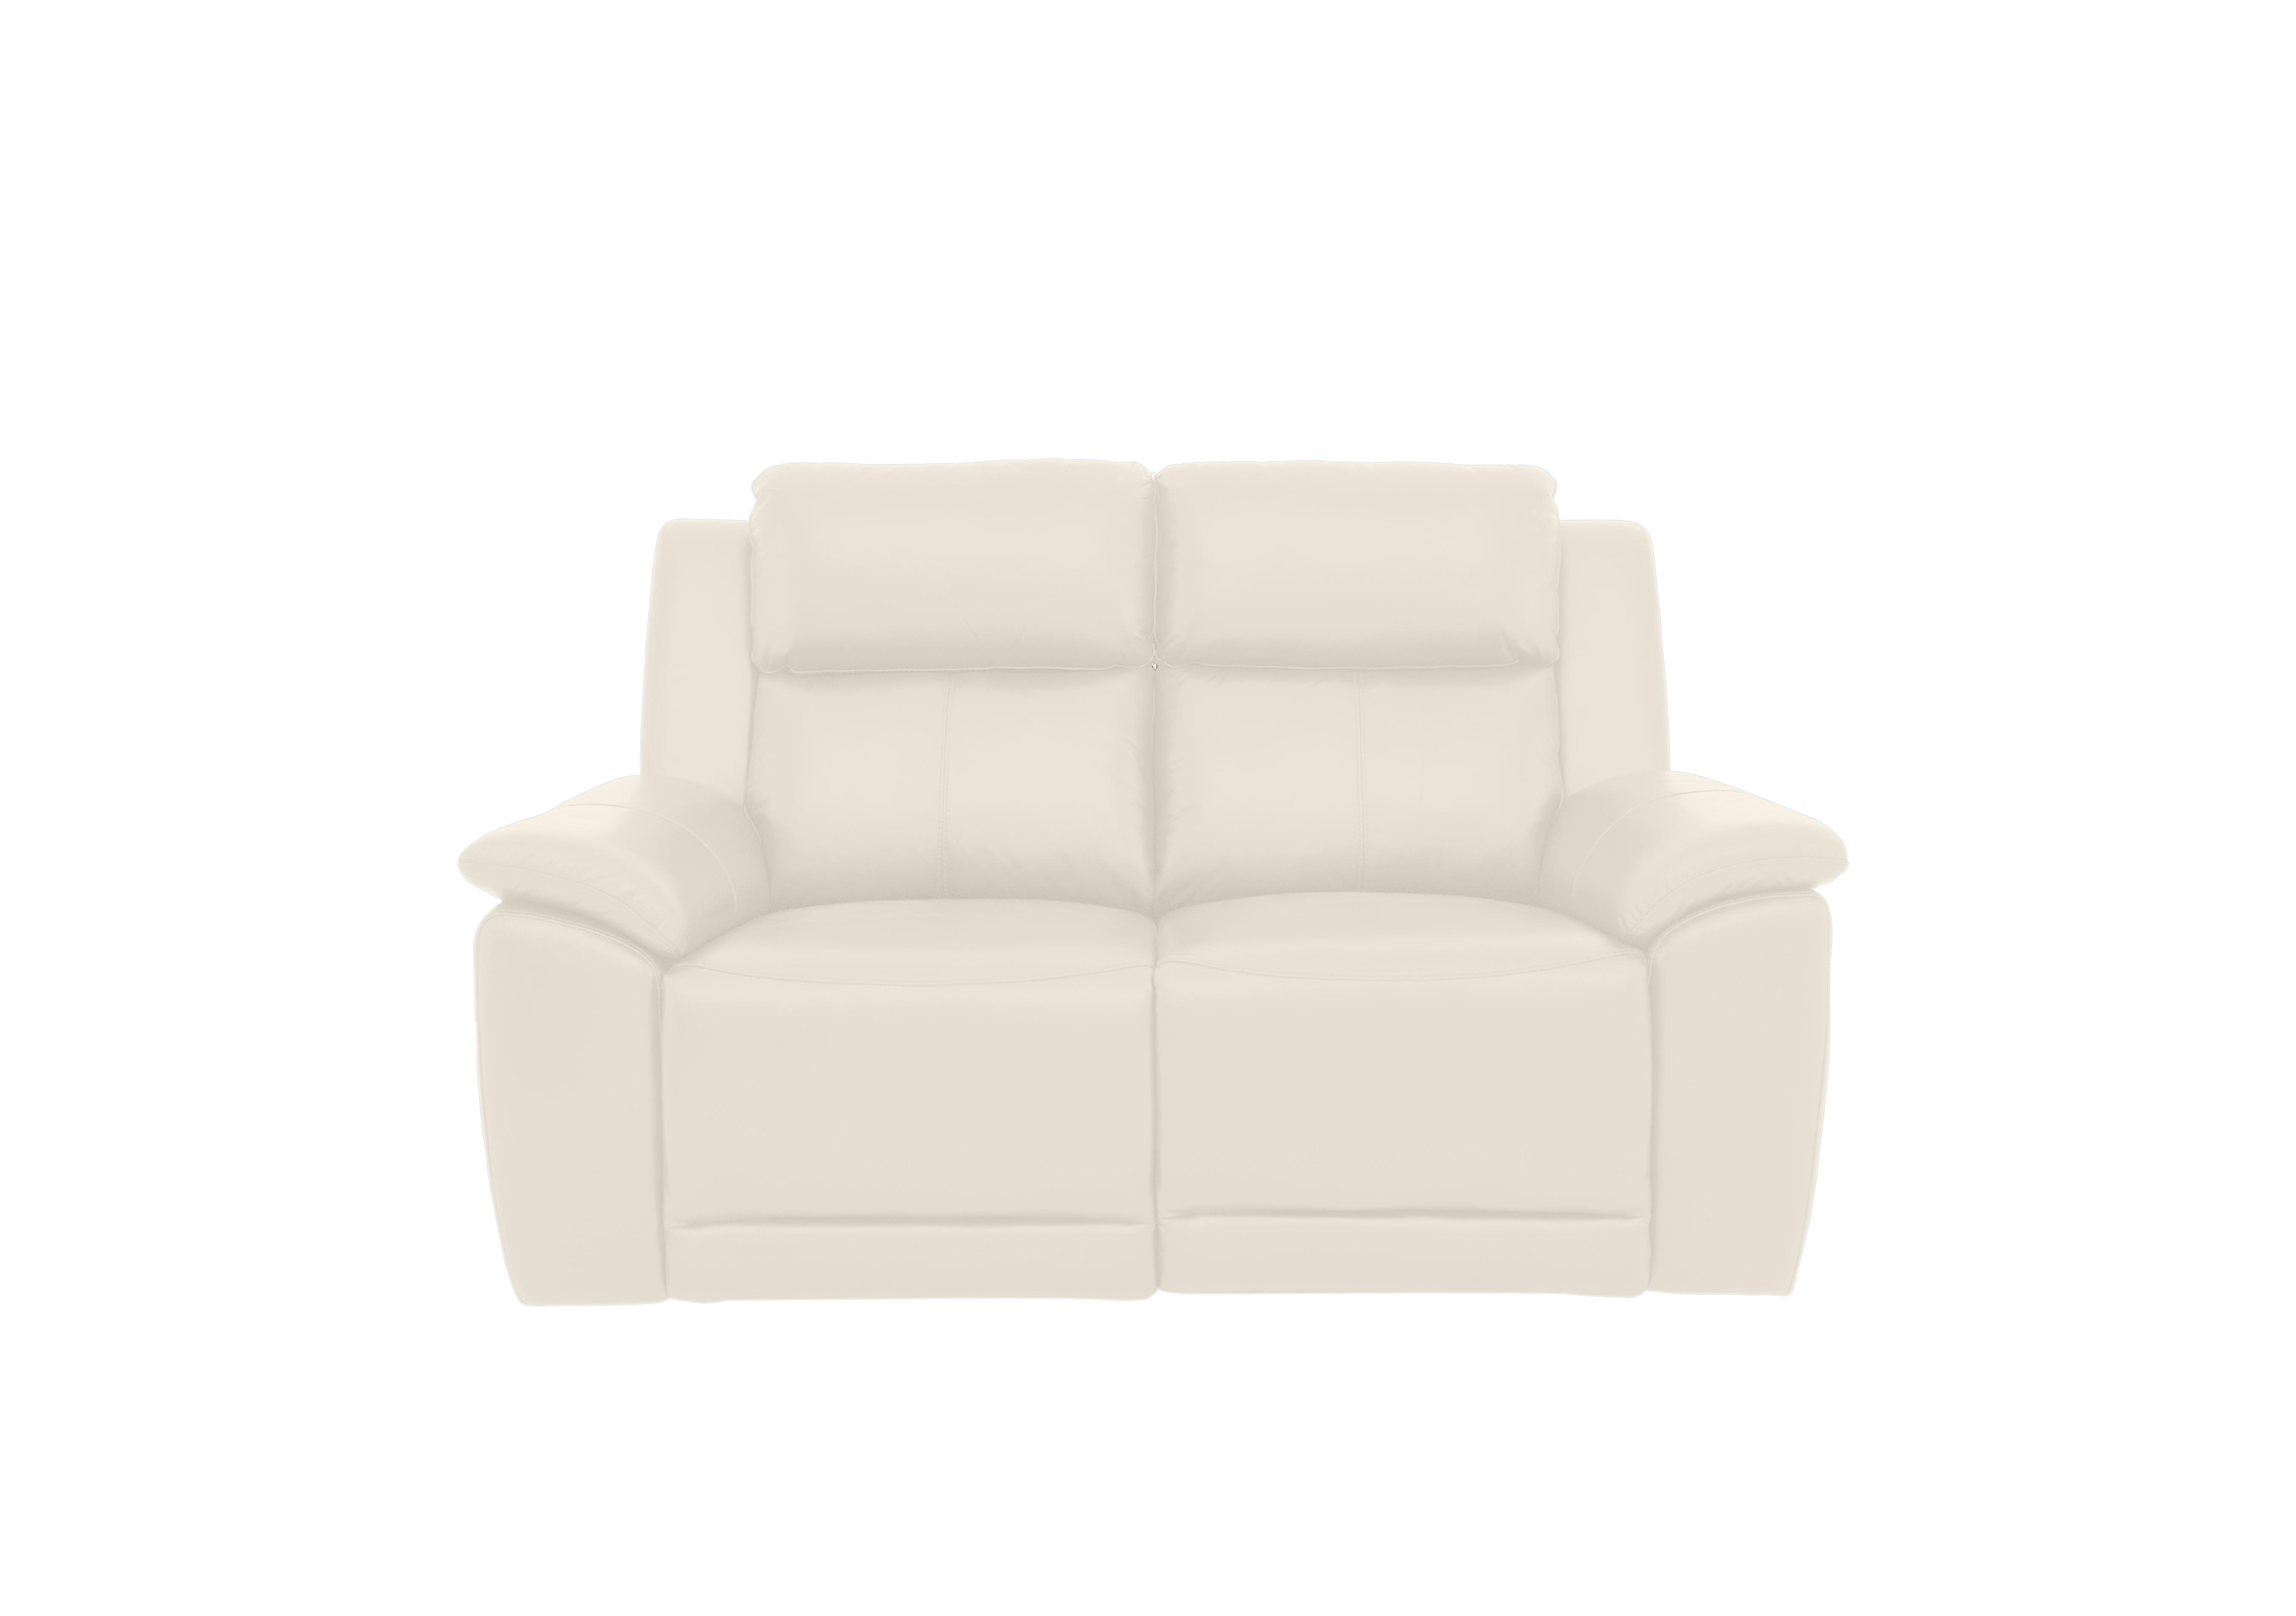 Utah 2 Seater Leather Sofa in White Le-9307 on Furniture Village